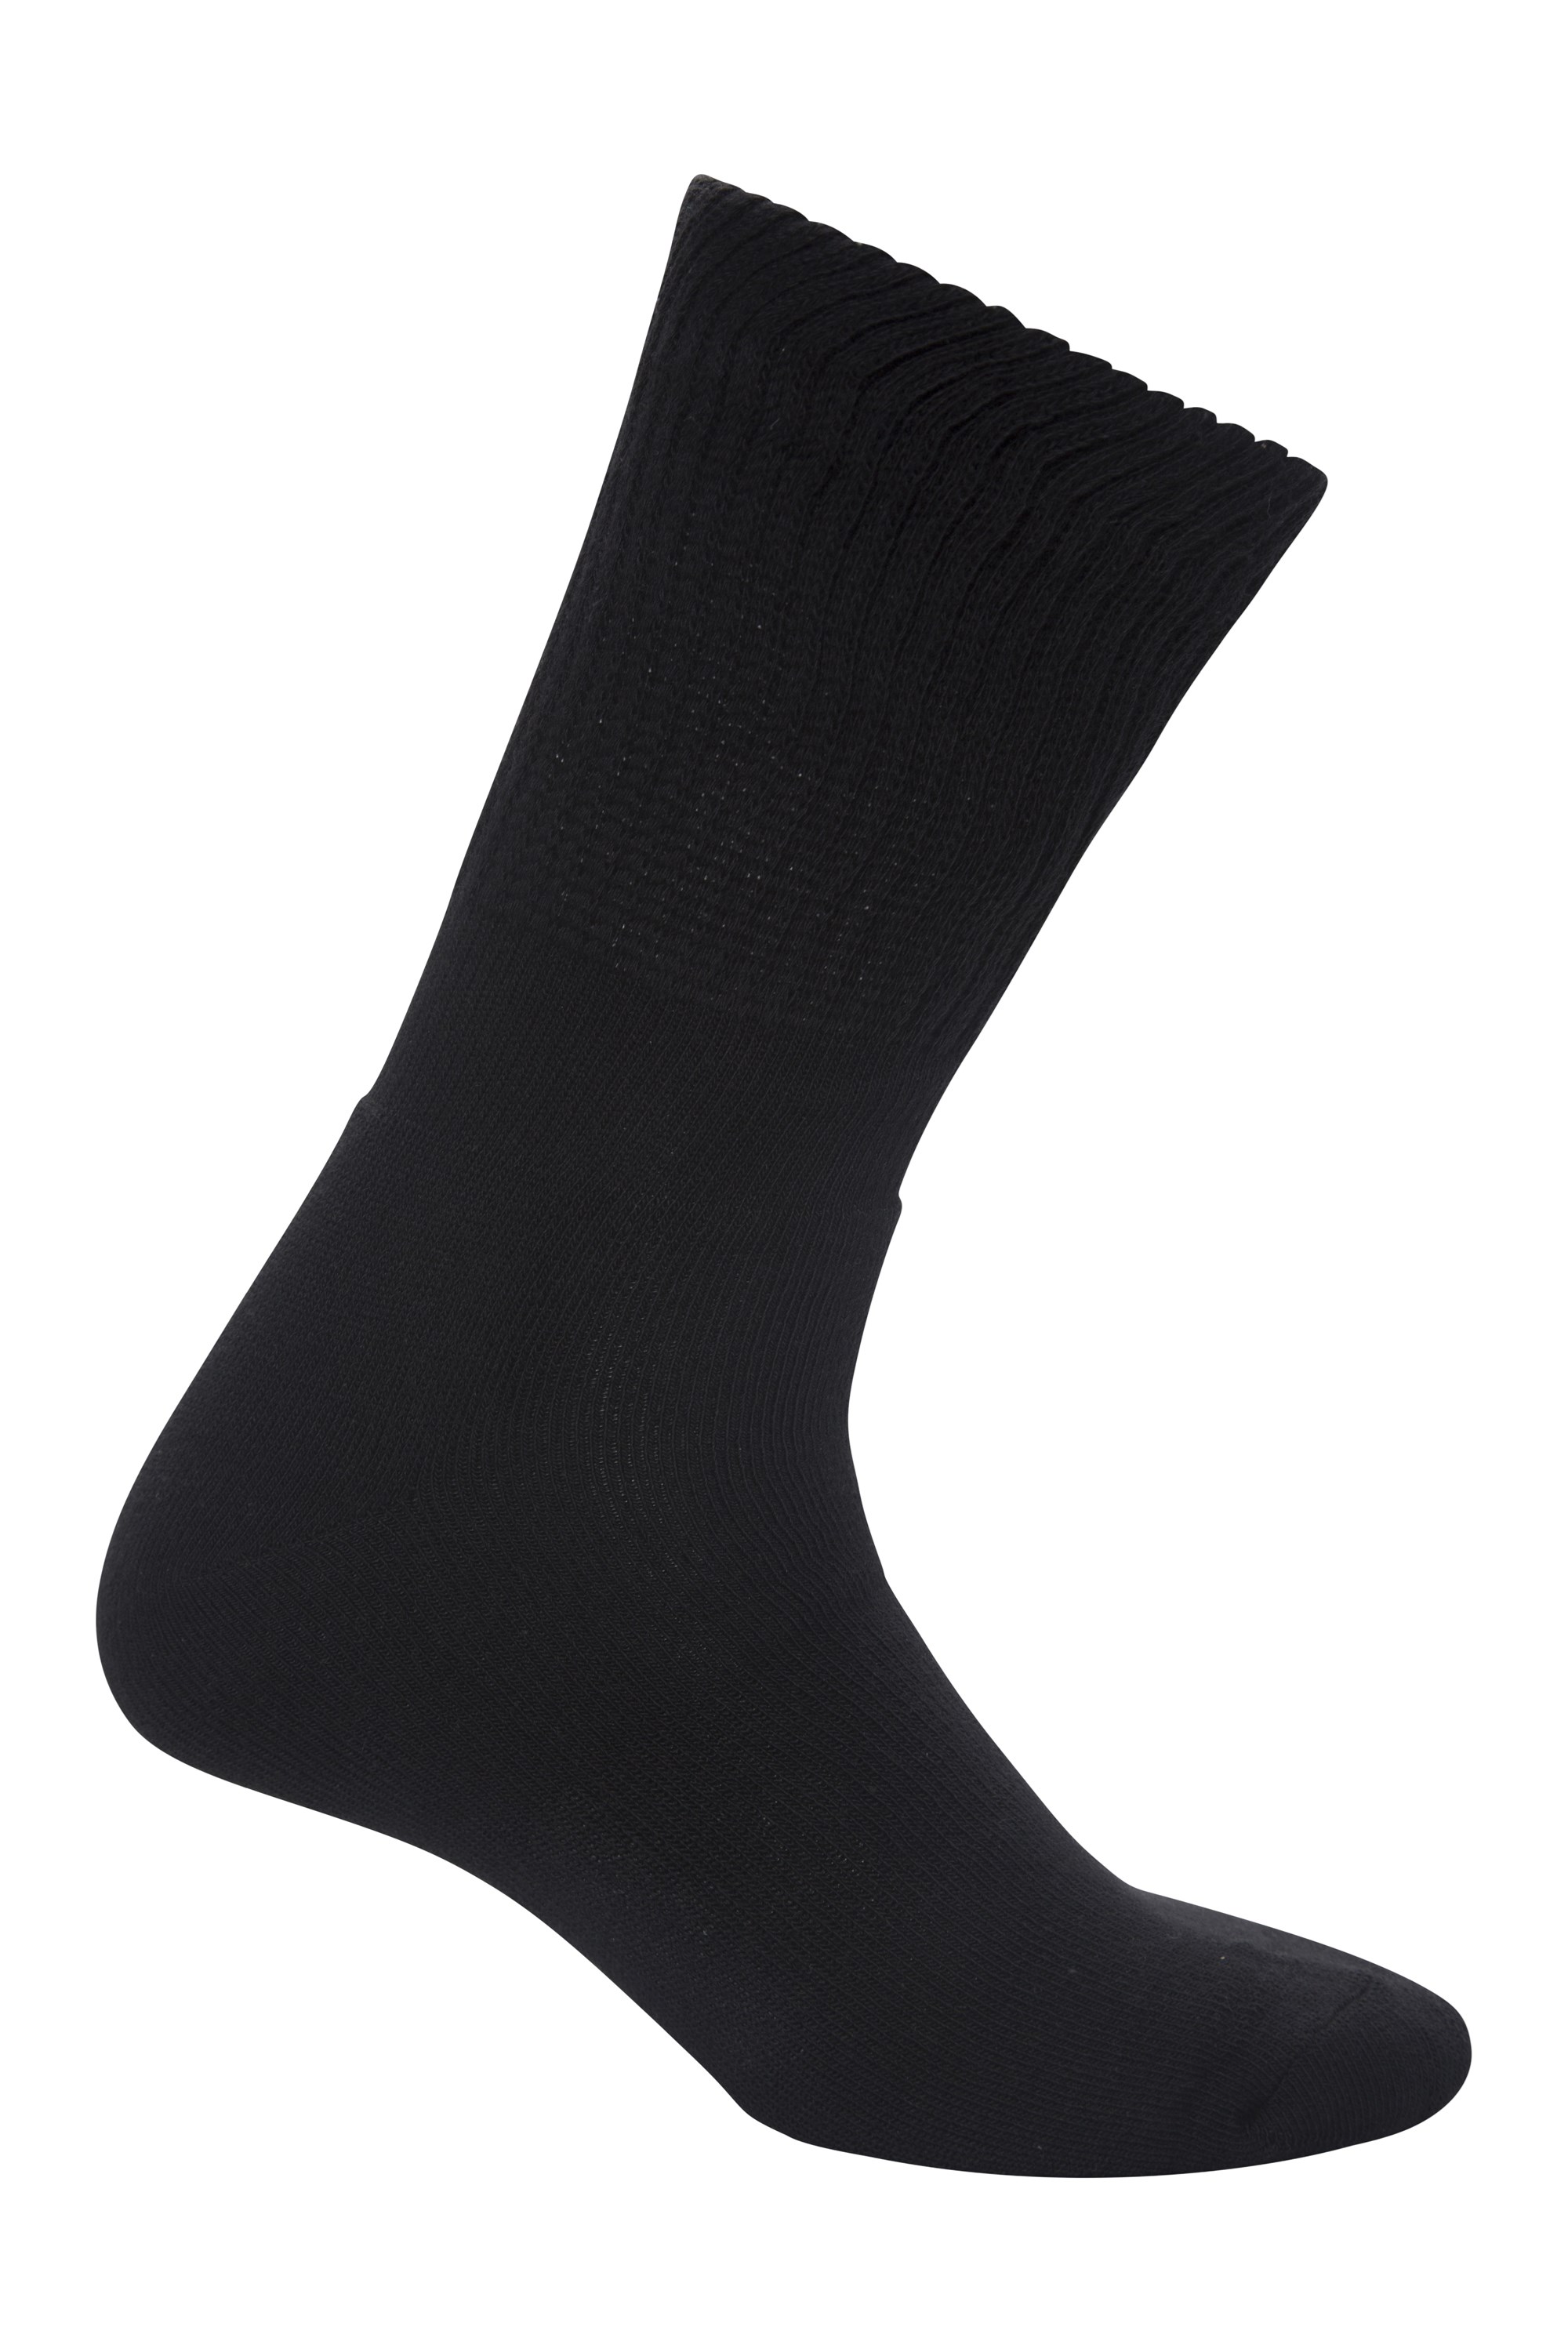 Double Layer Anti-Chafe Walking Socks - Black